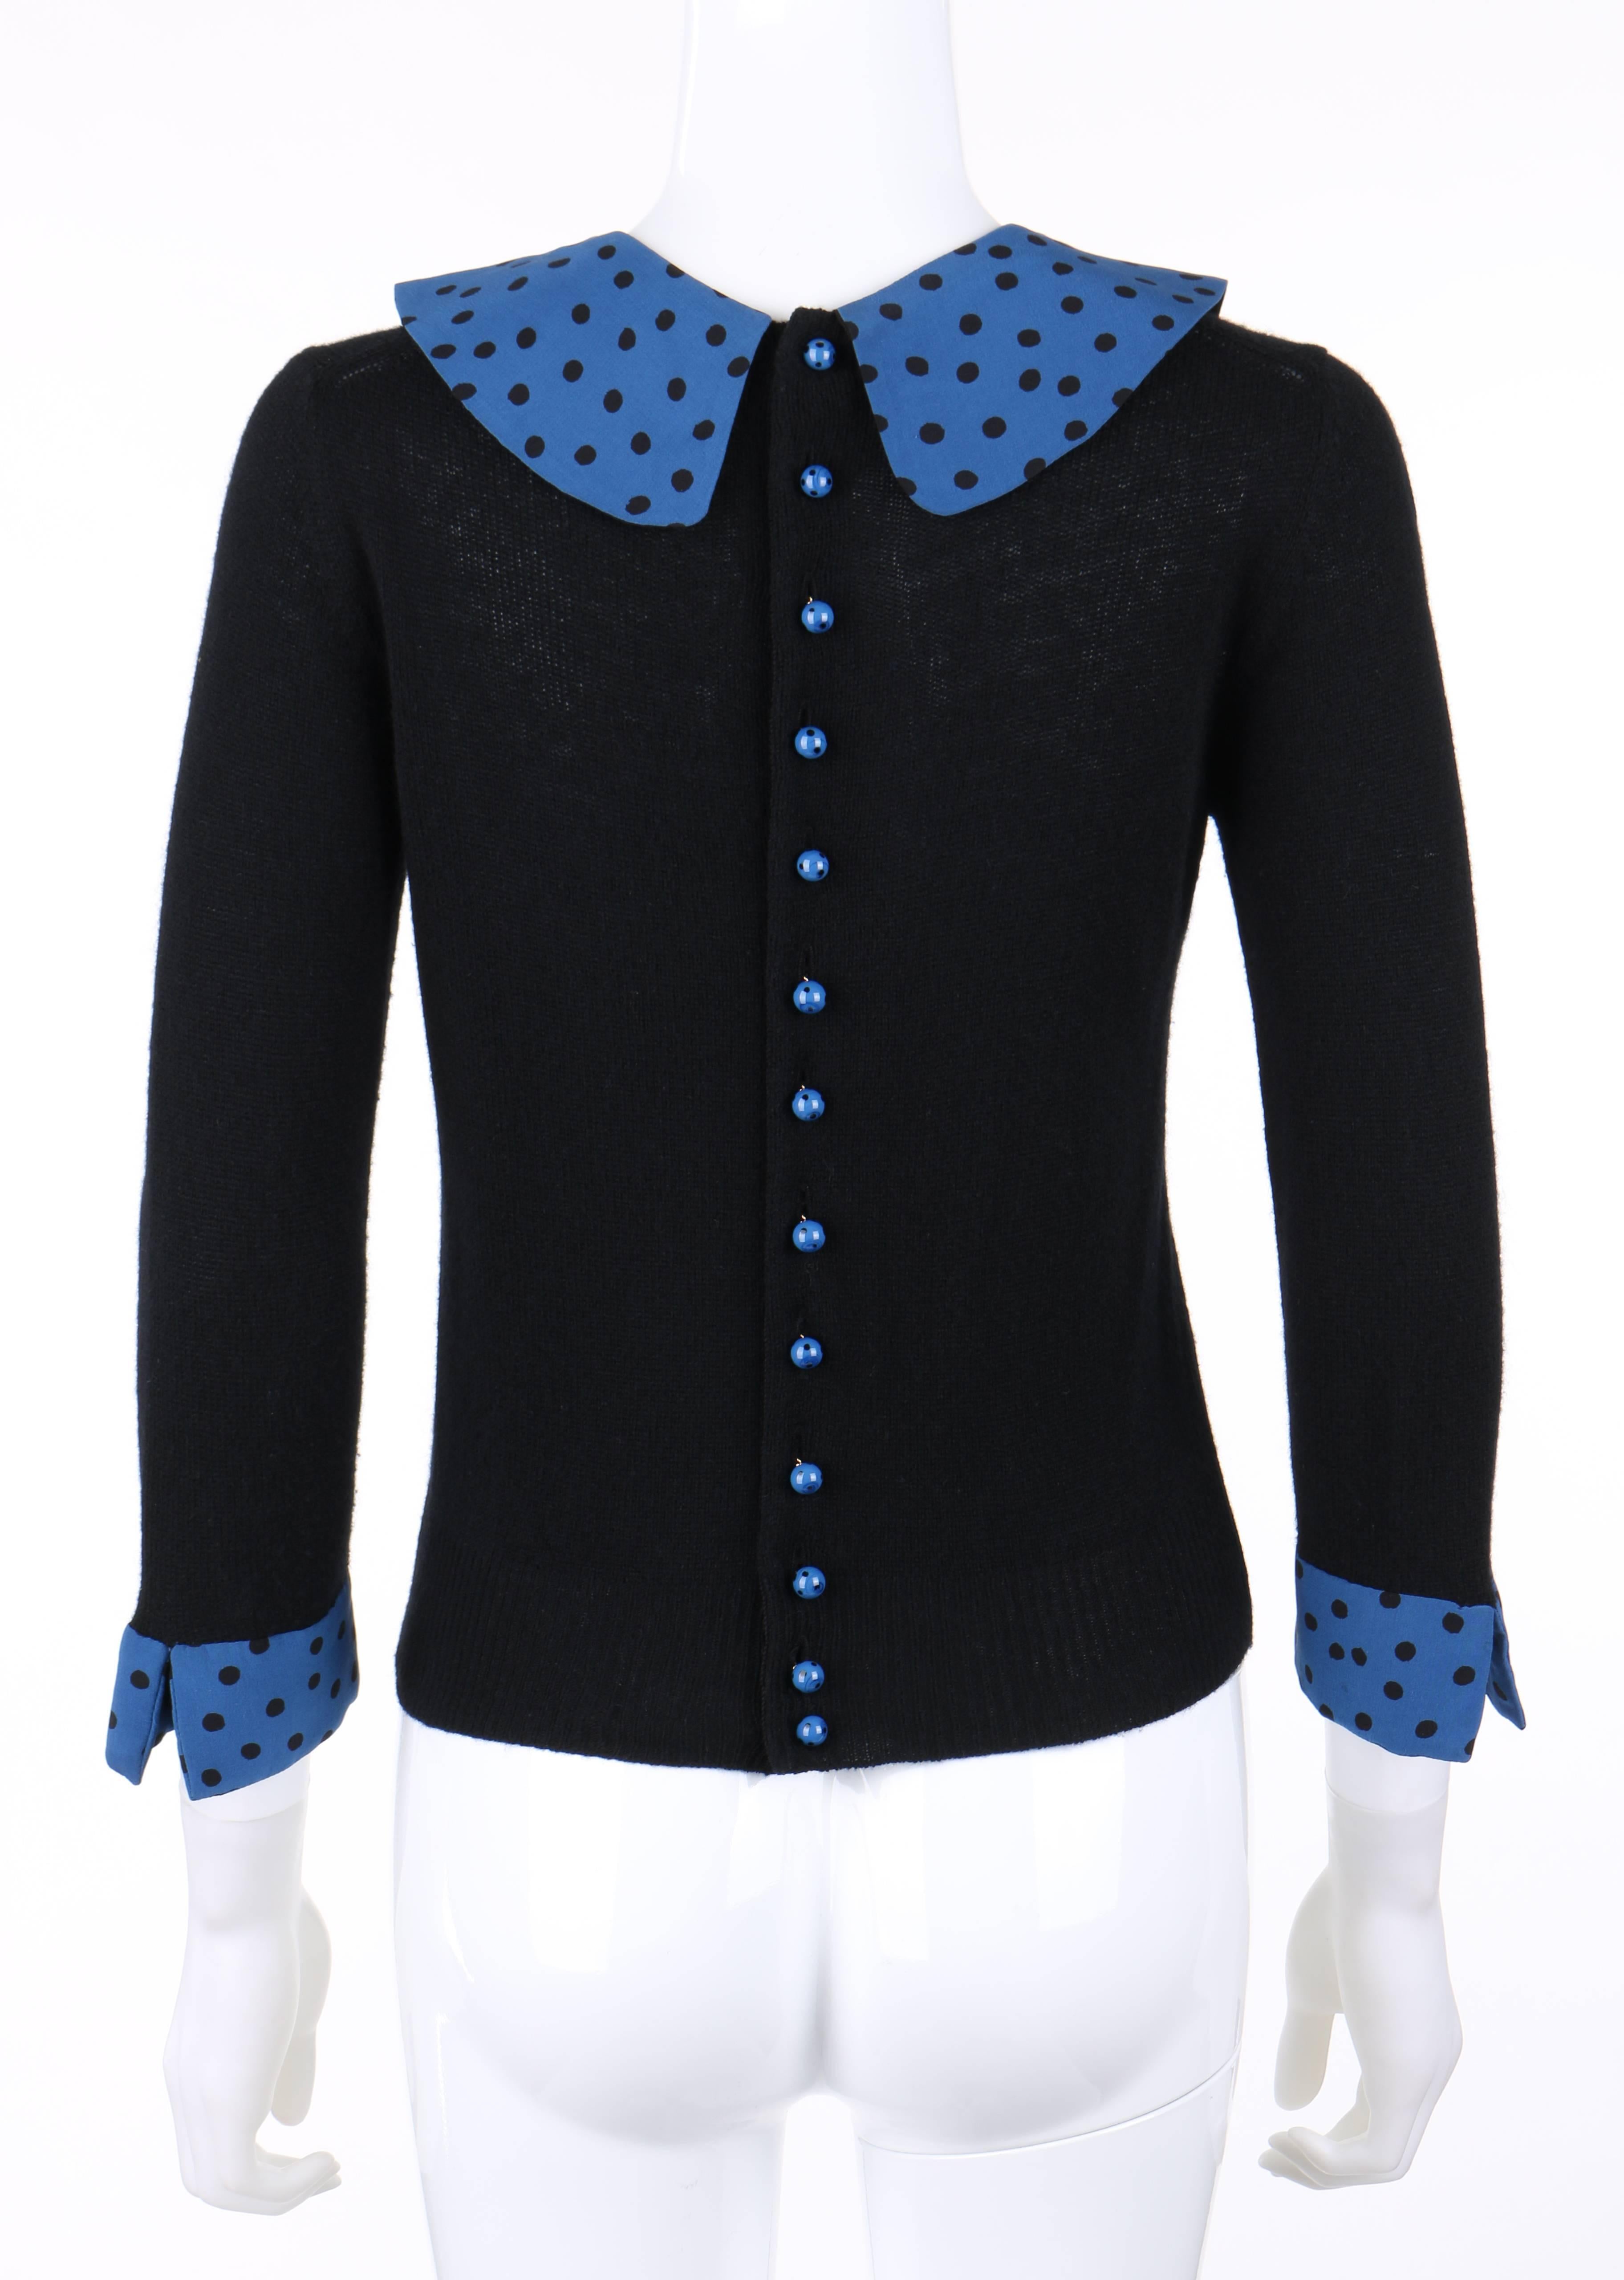 Women's LOUIS VUITTON S/S 2005 Black & Blue Polkadot Cashmere Silk Button Back Sweater